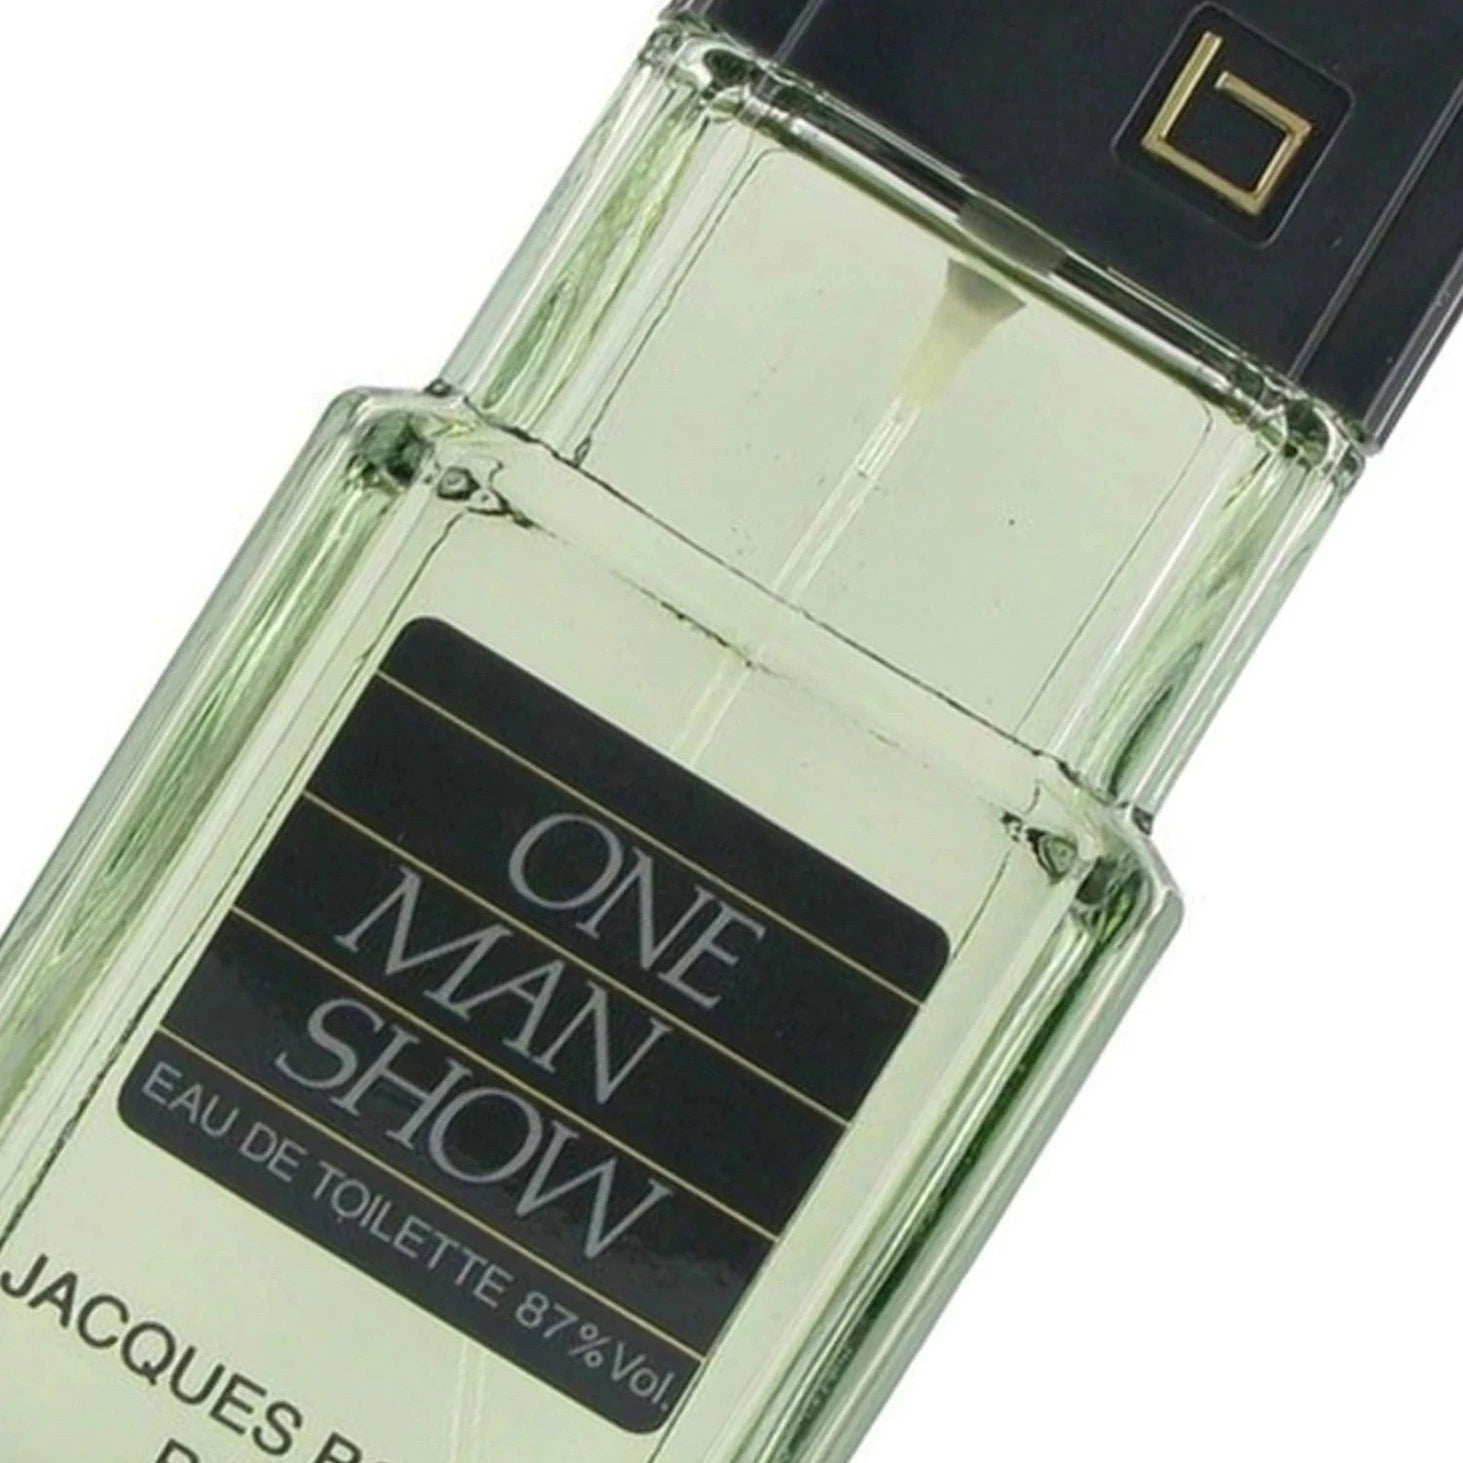 Jacques Bogart One Man Show Body Spray | My Perfume Shop Australia